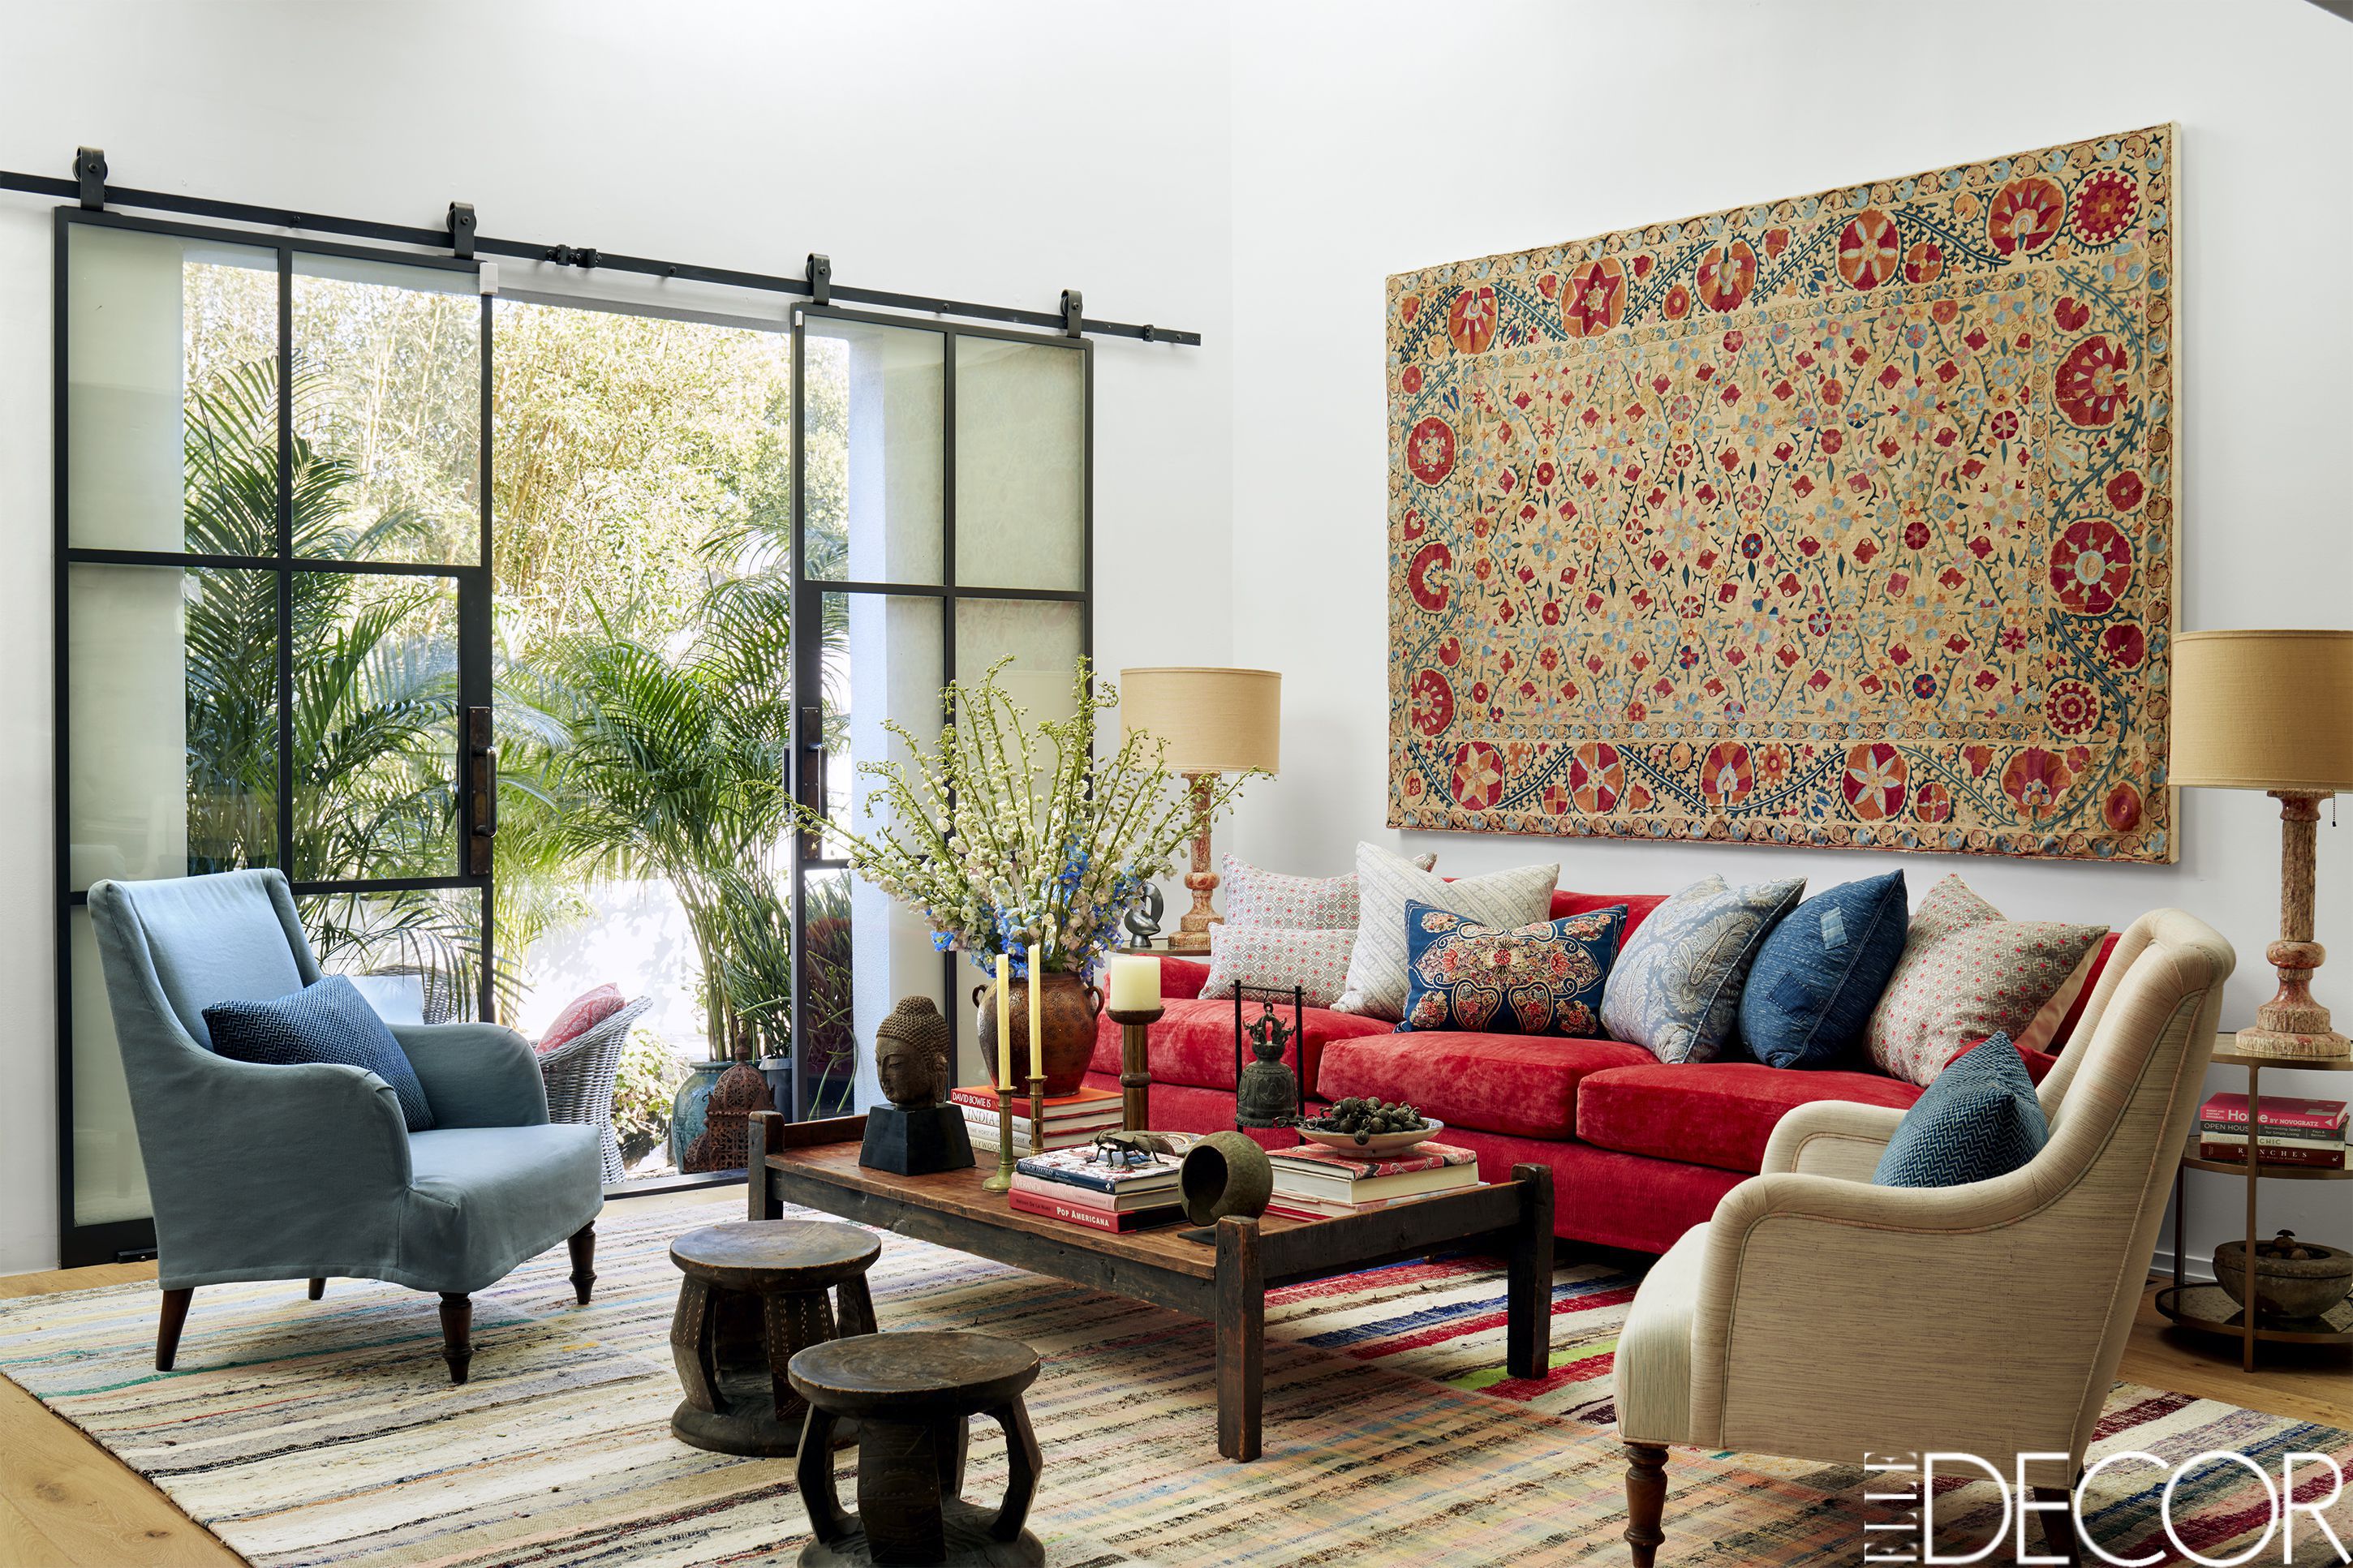 Best Home Decorating Ideas  80+ Top Designer Decor Tricks & Tips ...